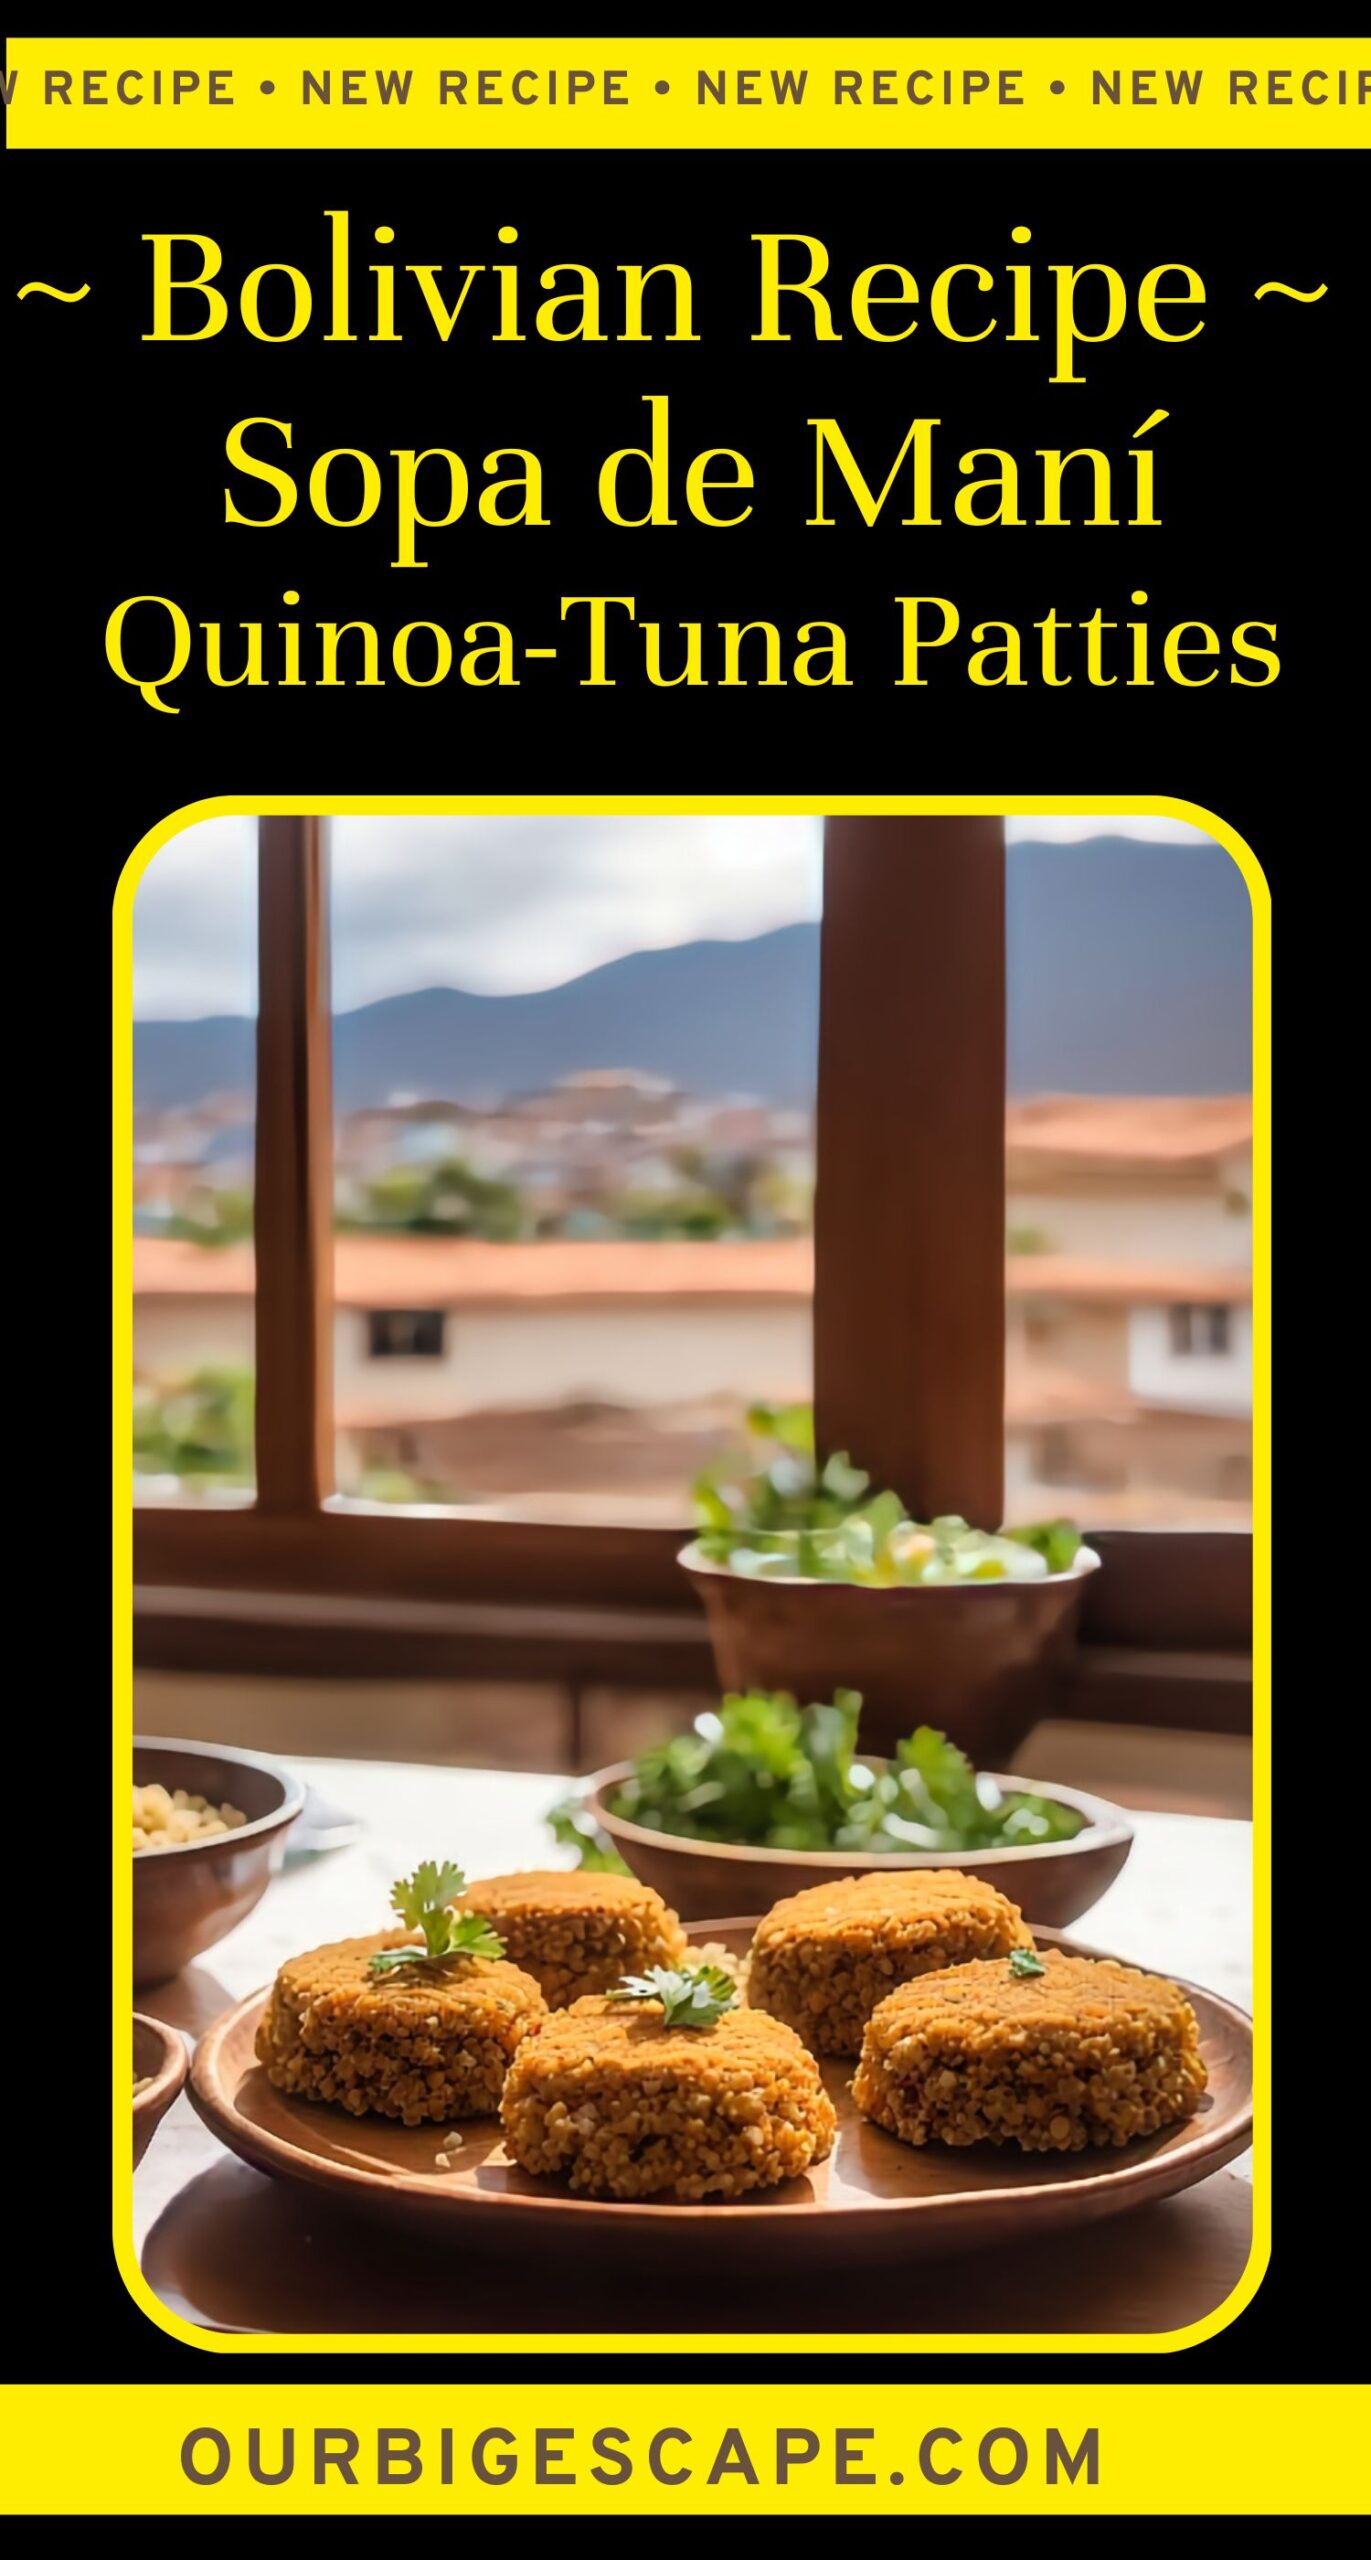 23. Bolivian Papitas - Quinoa-Tuna Patties